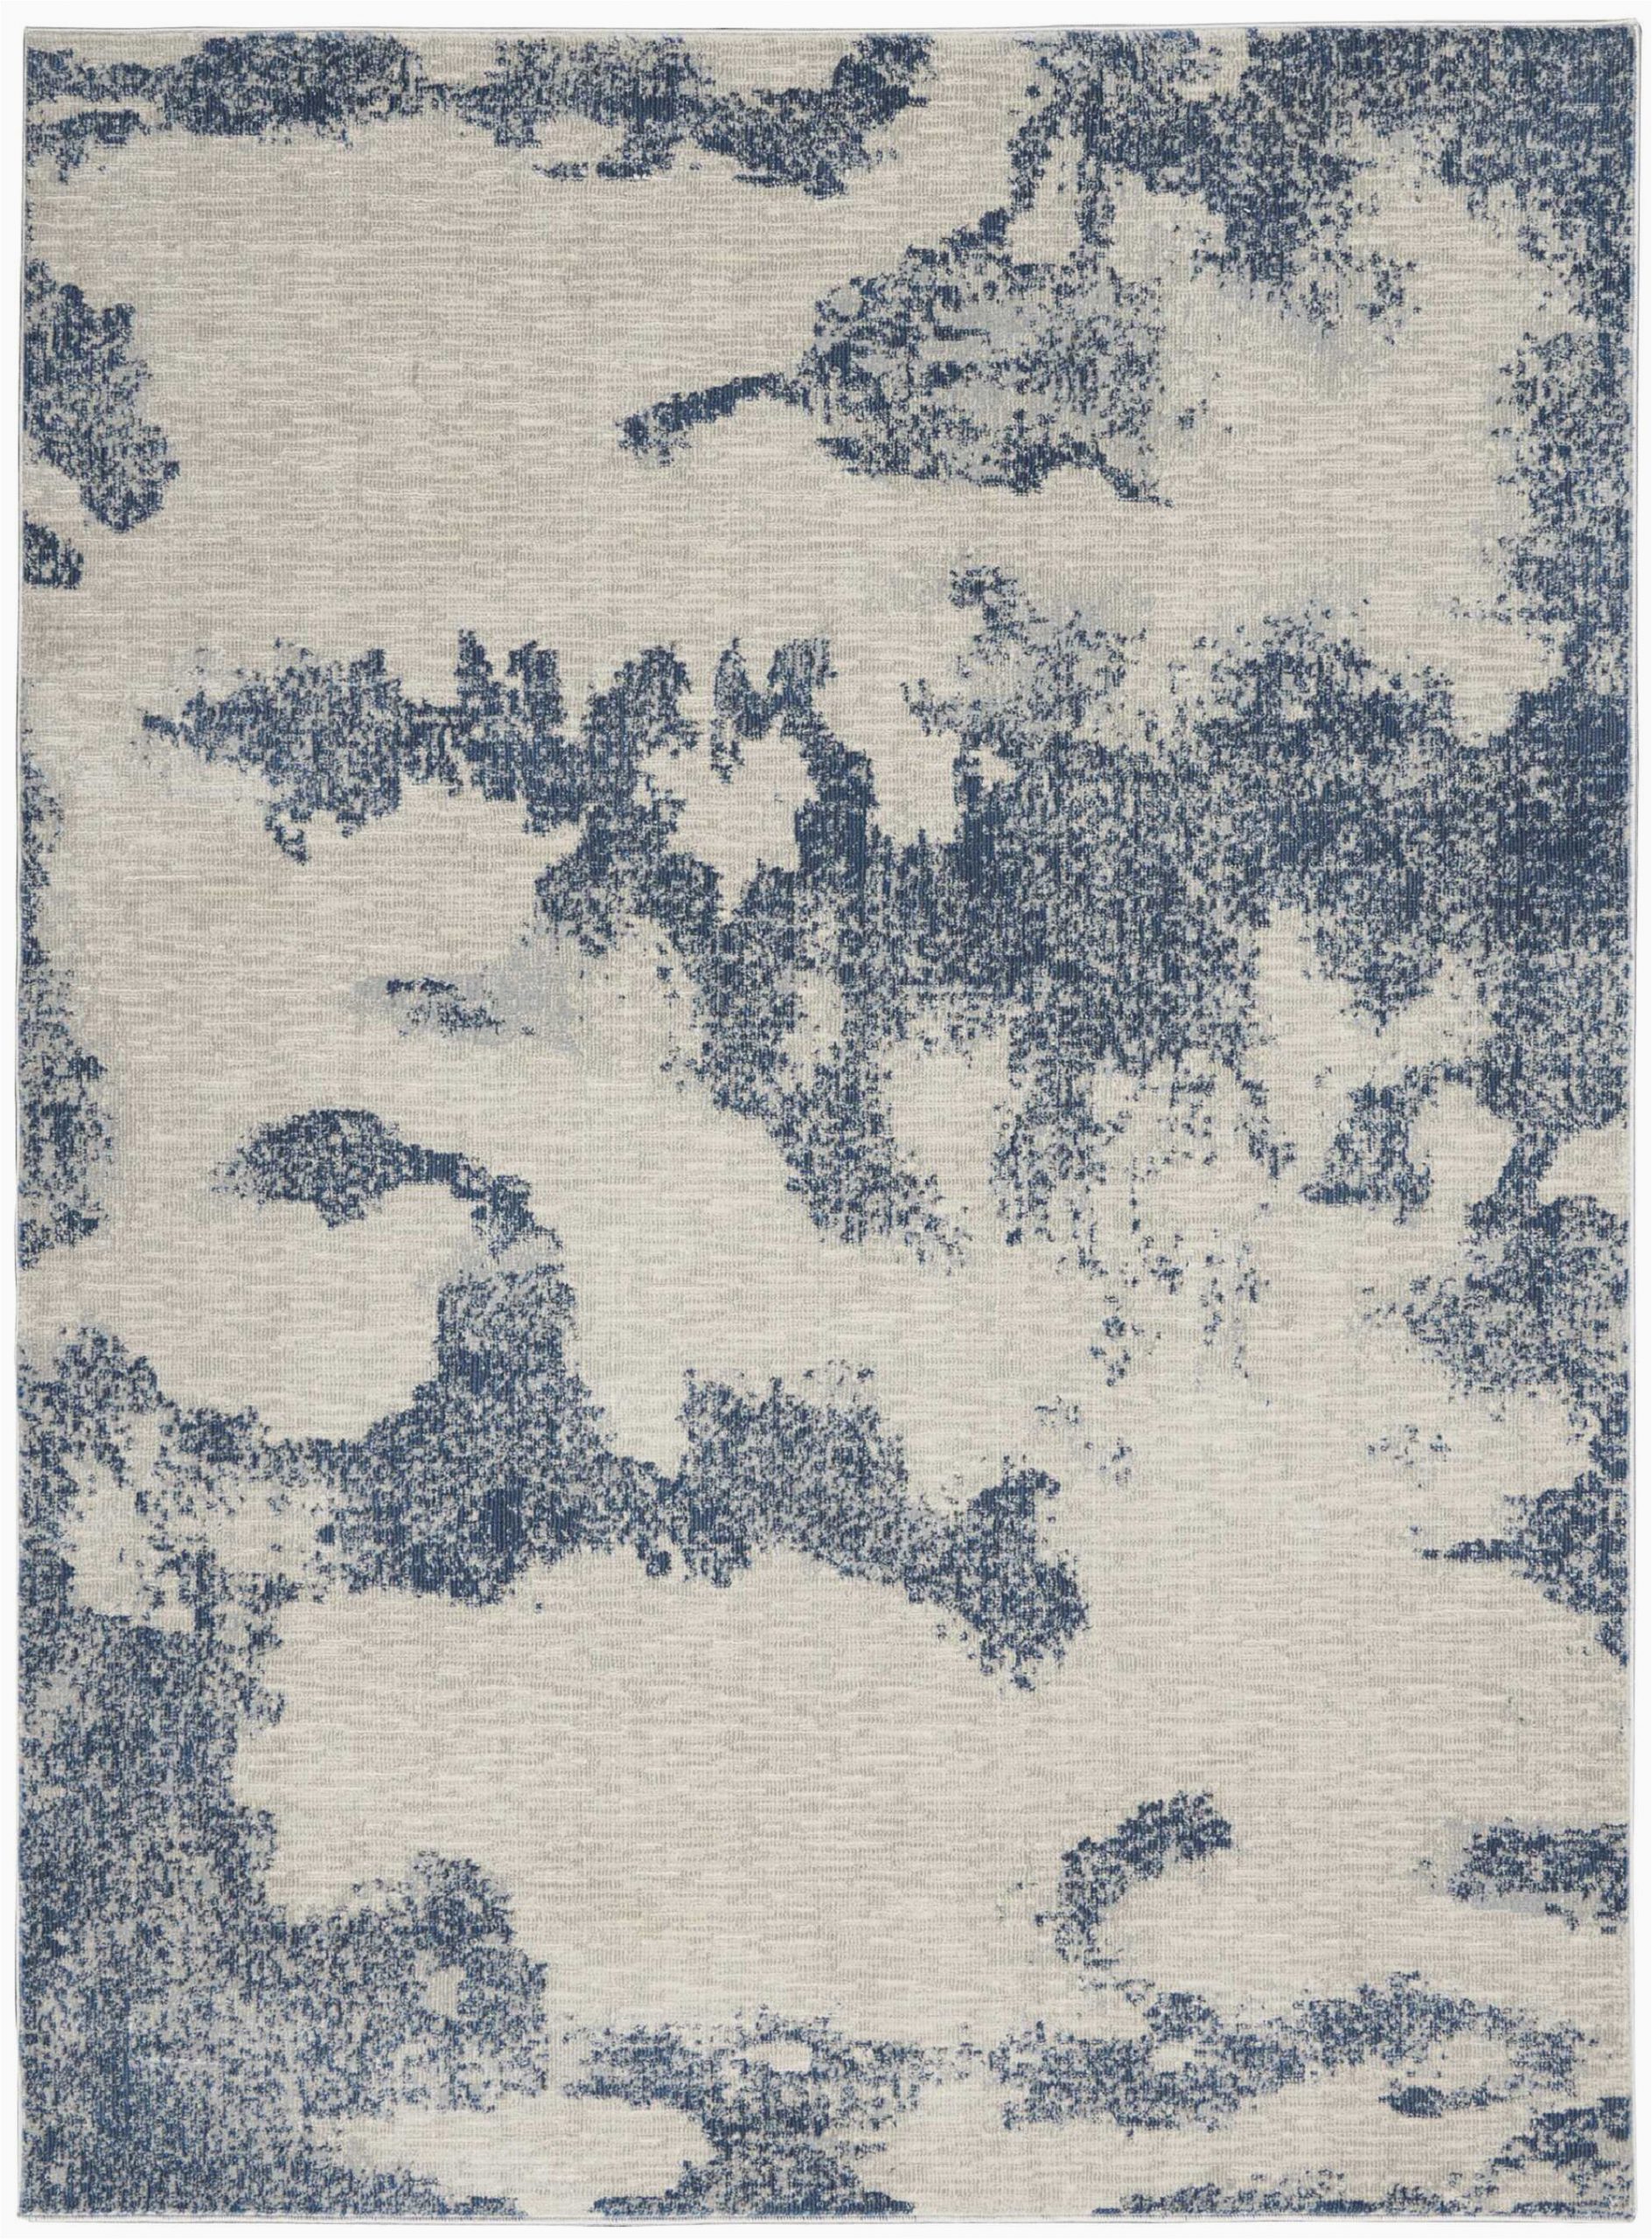 schooley abstract ivorynavy blue area rug